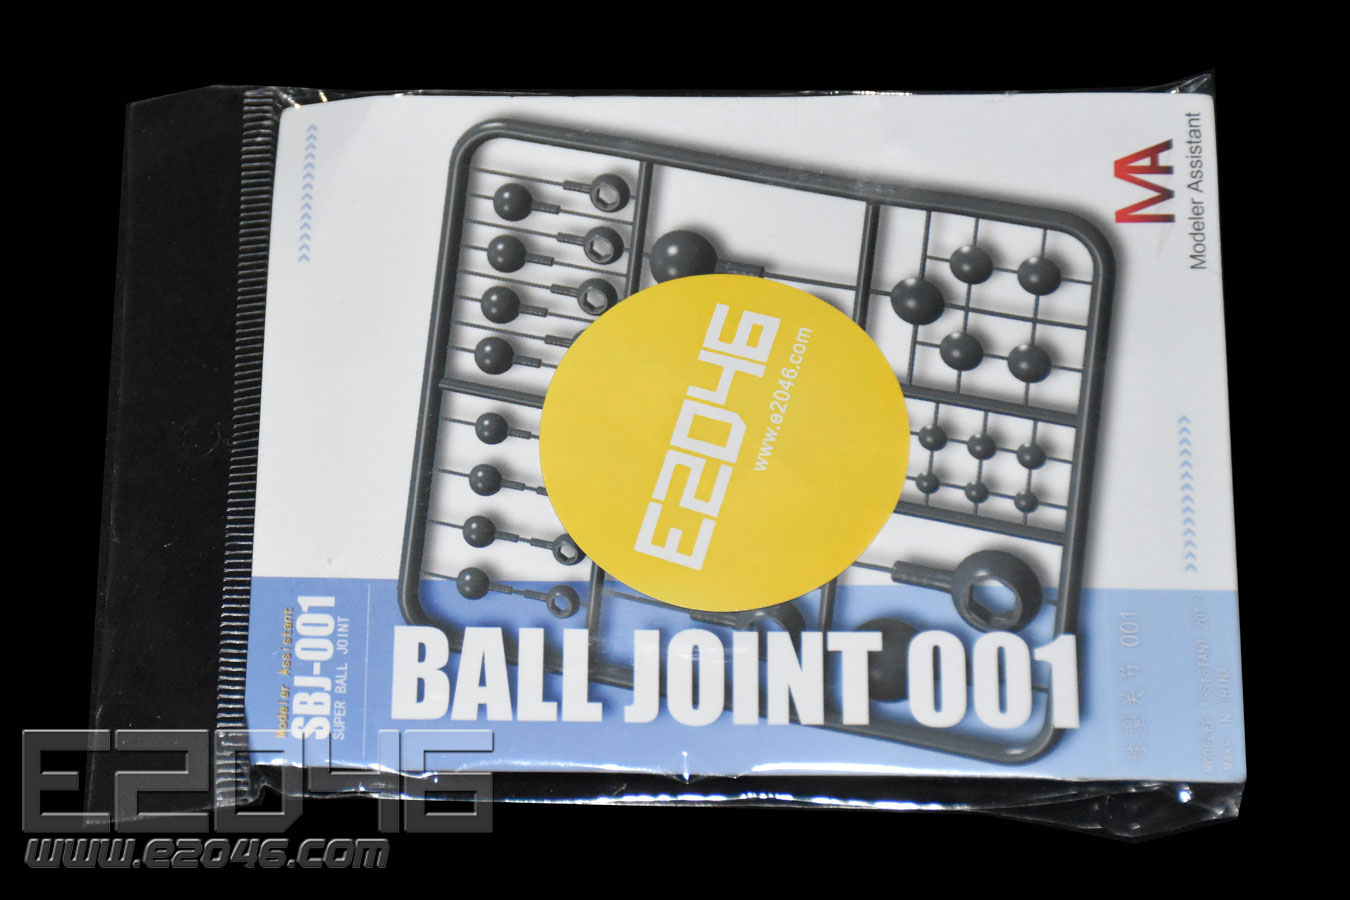 Joint Ball 001 